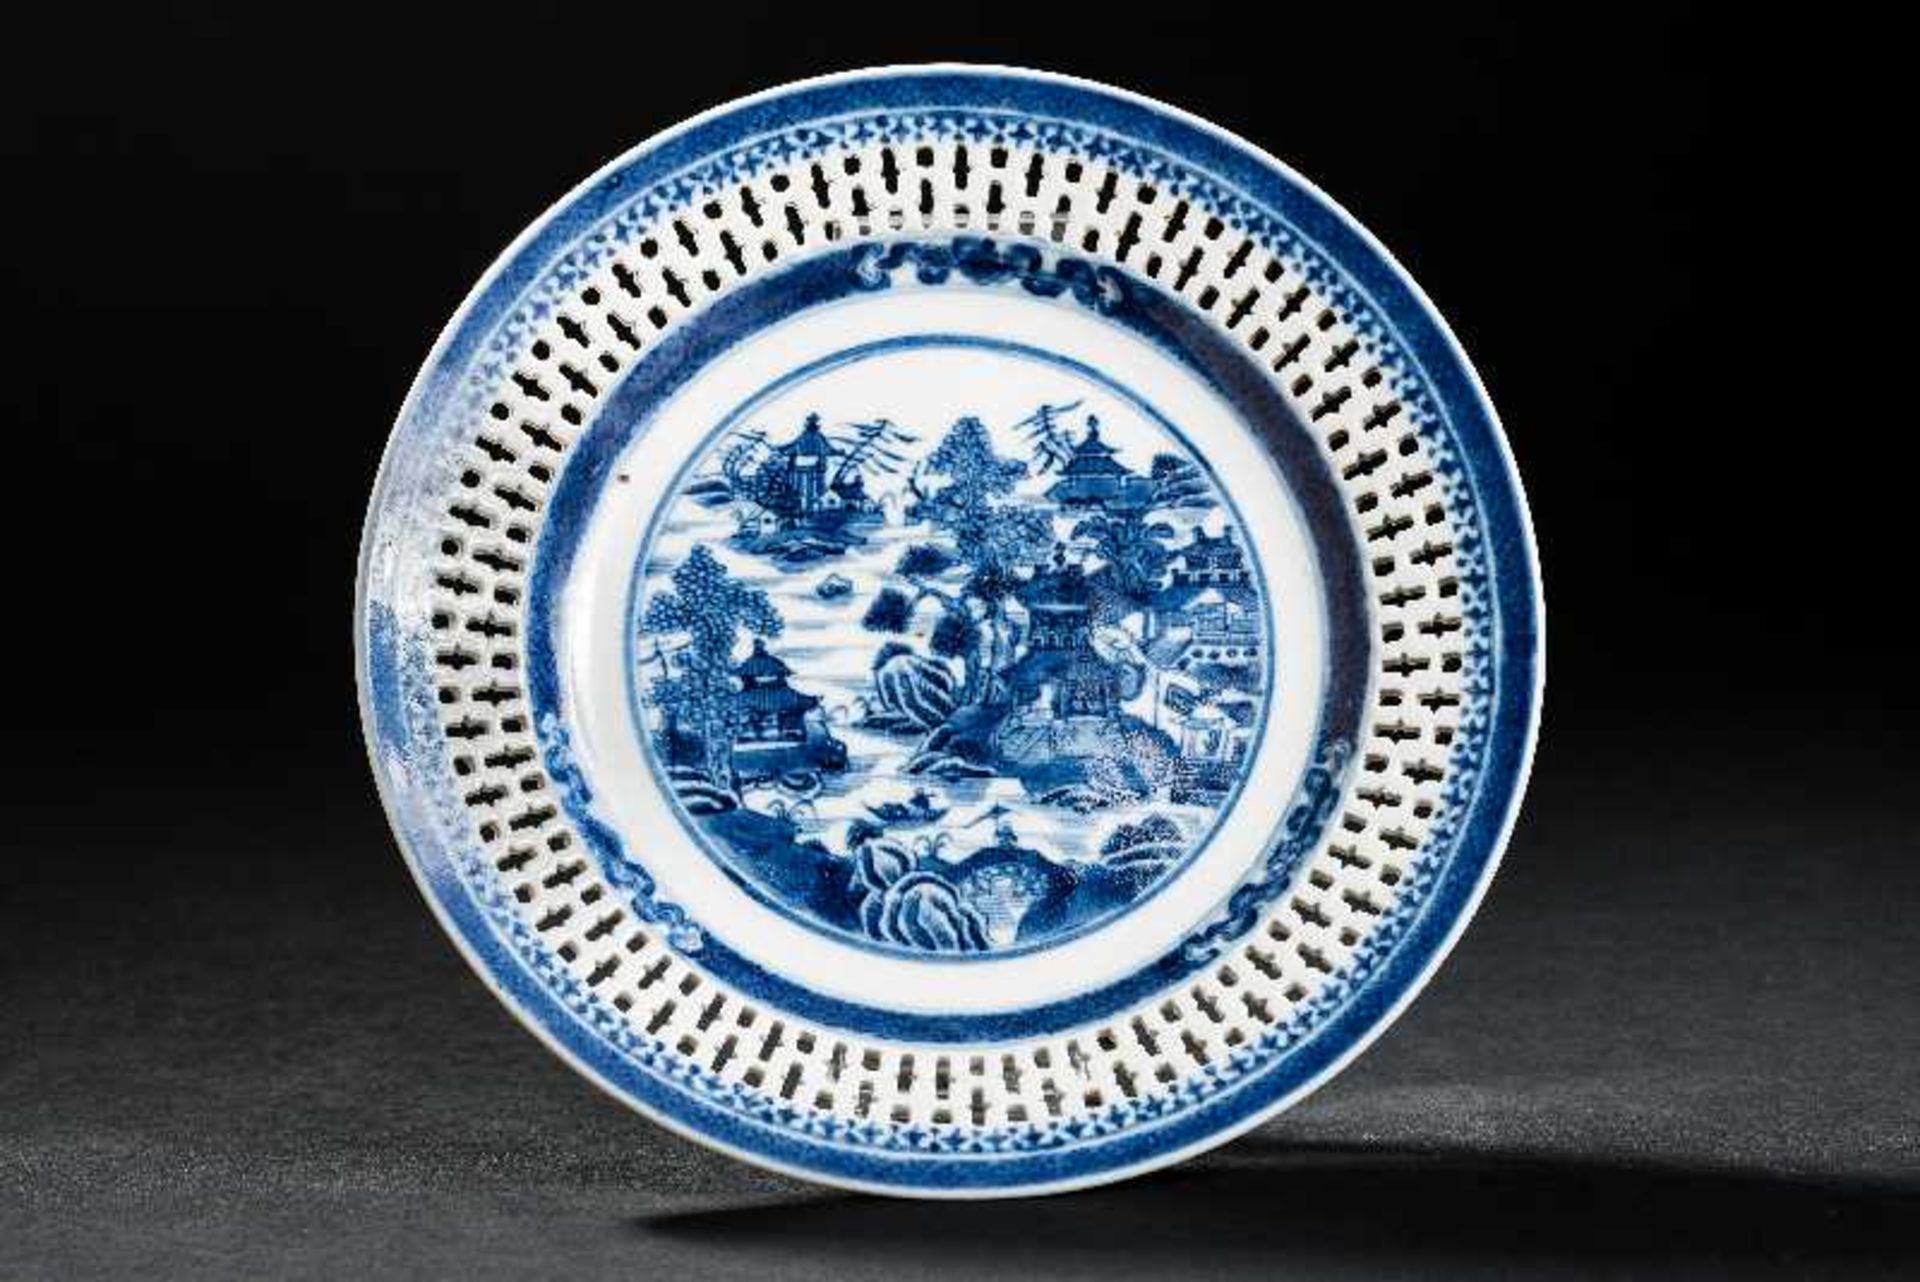 DEKORATIVER TELLER MIT TEMPELLANDSCHAFT Blauweiß-Porzellan. China, Jiaqing-Periode der Qing-